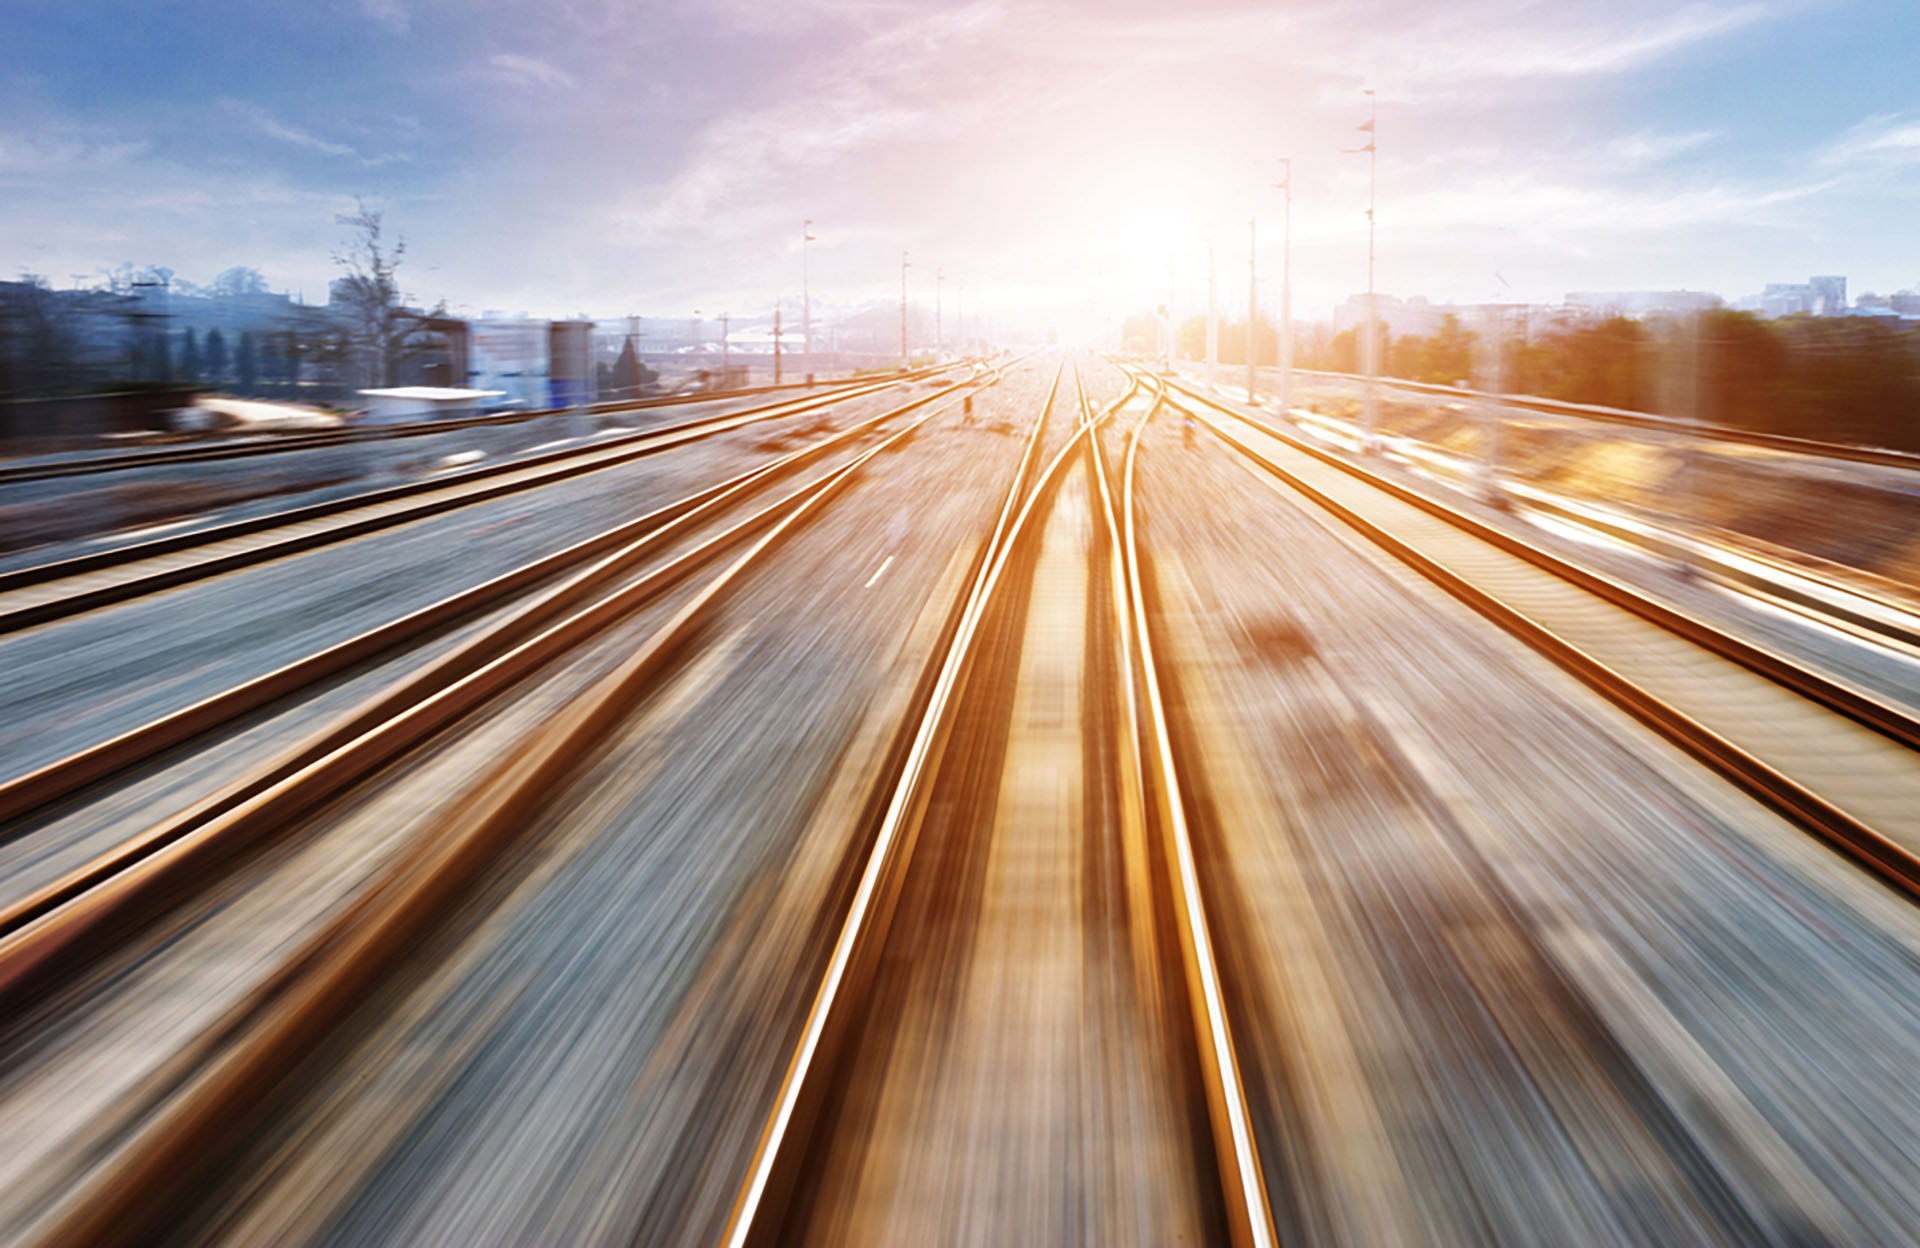 Photo of dynamic railroad tracks